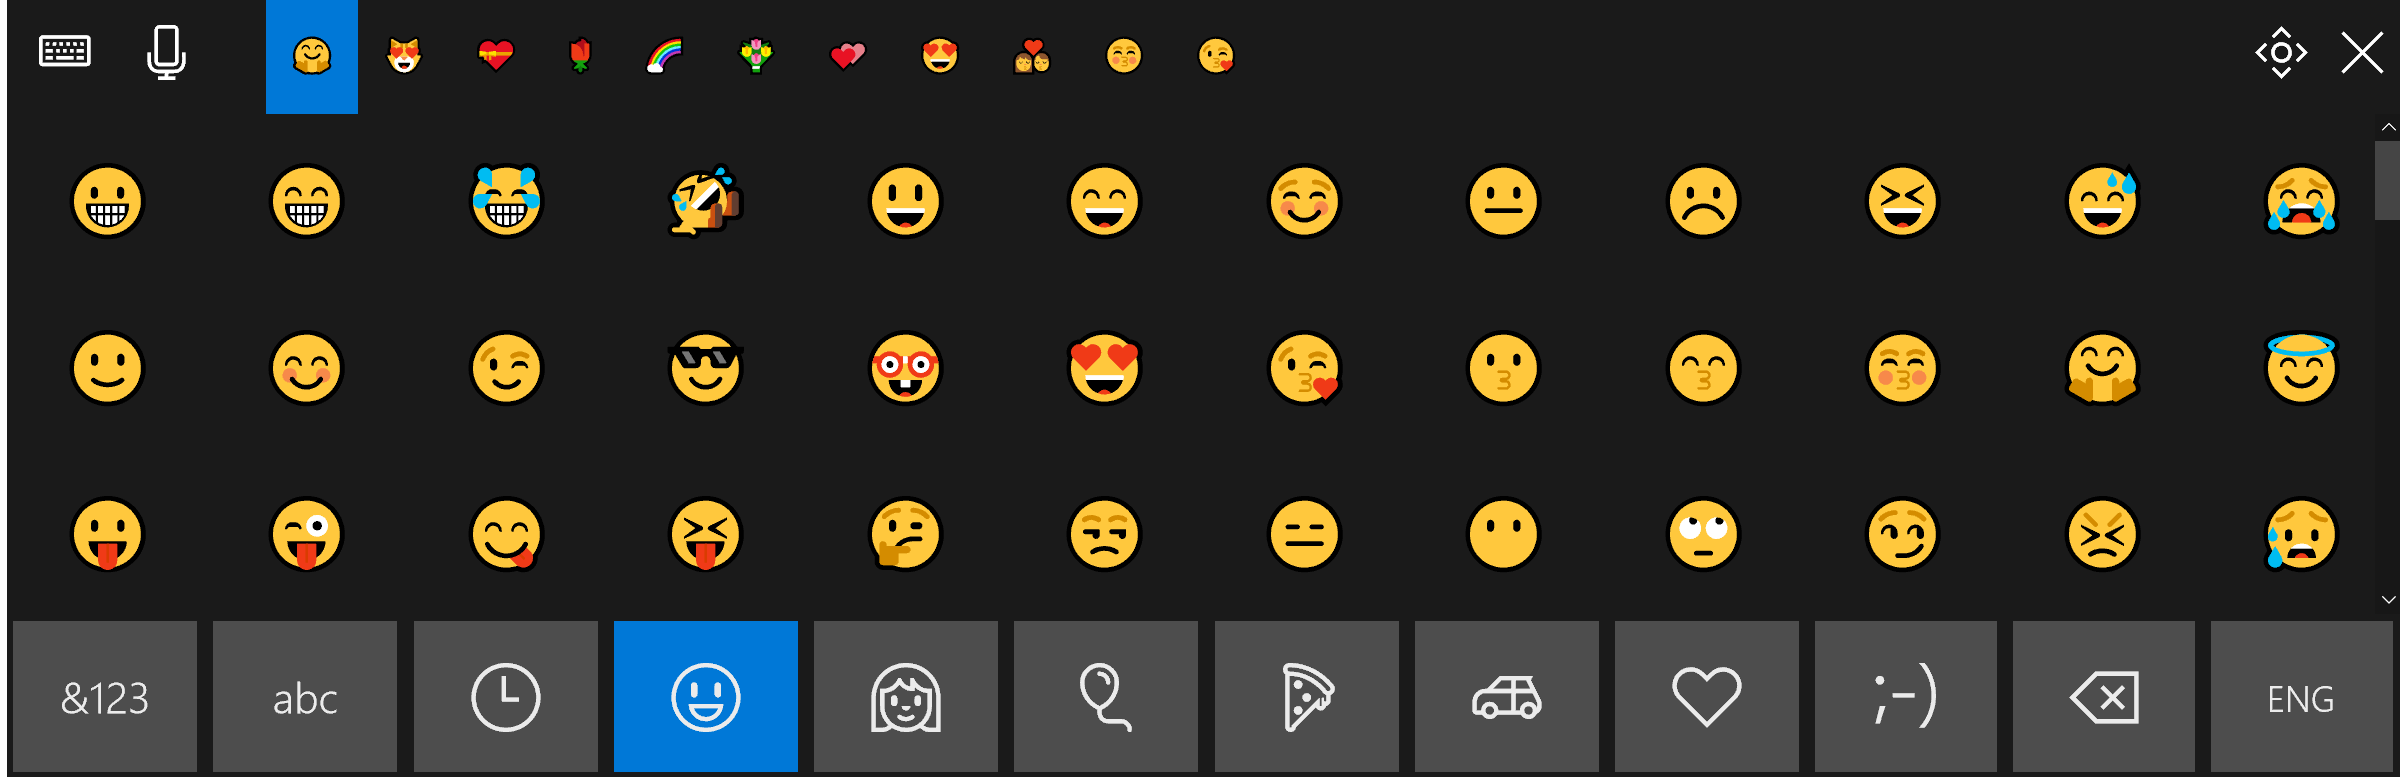 Improved emoji experience.